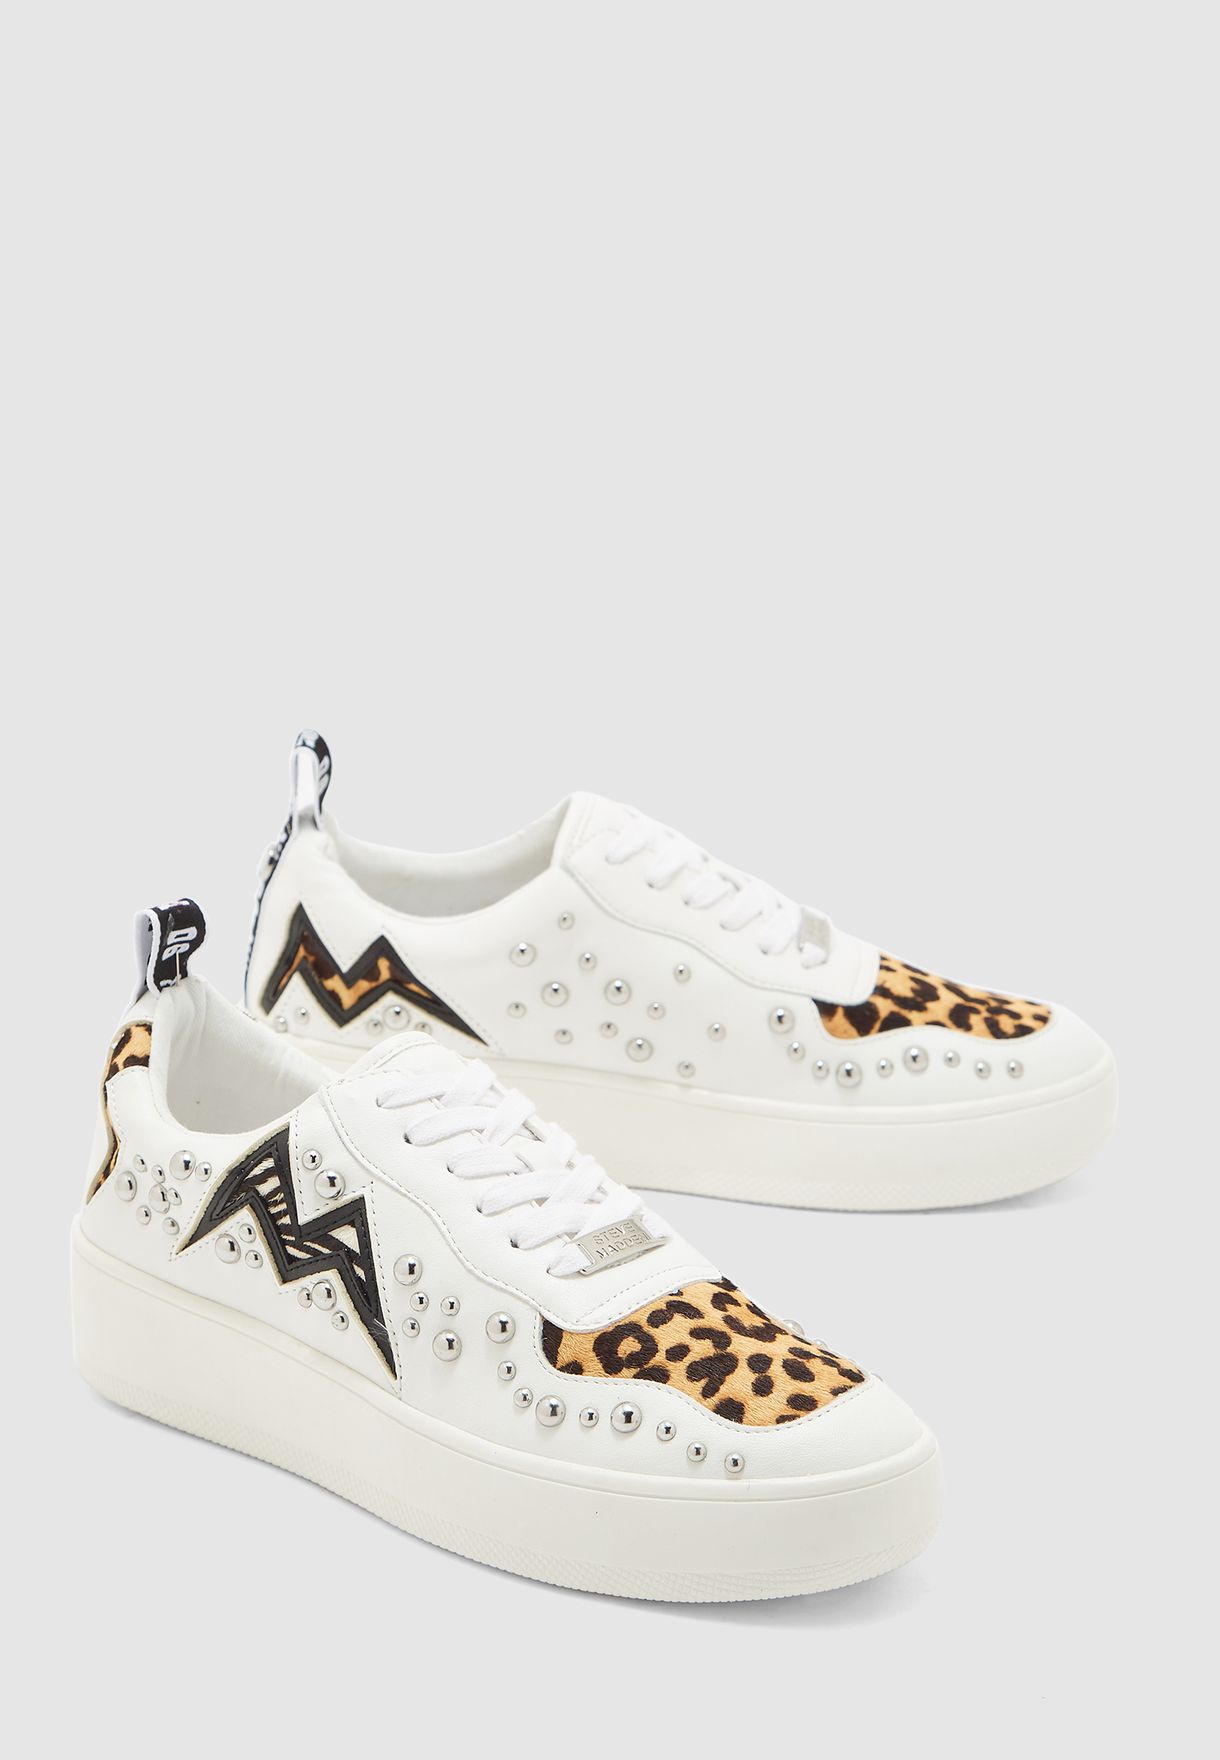 madden leopard sneakers